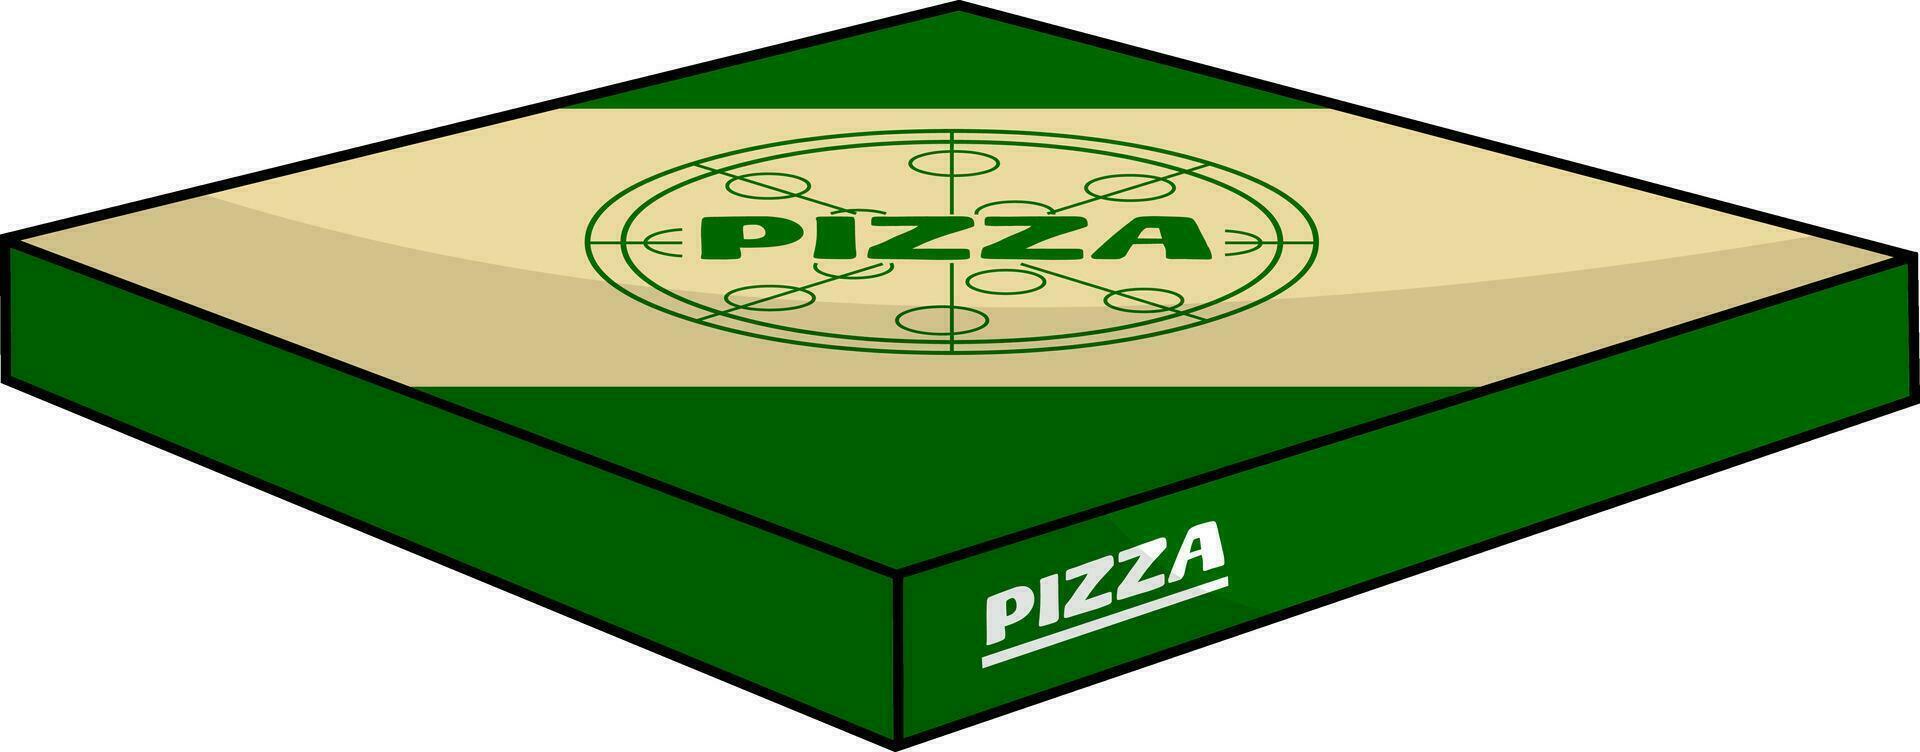 Cartoon Square Carton Pizza Box. Vector Hand Drawn Illustration